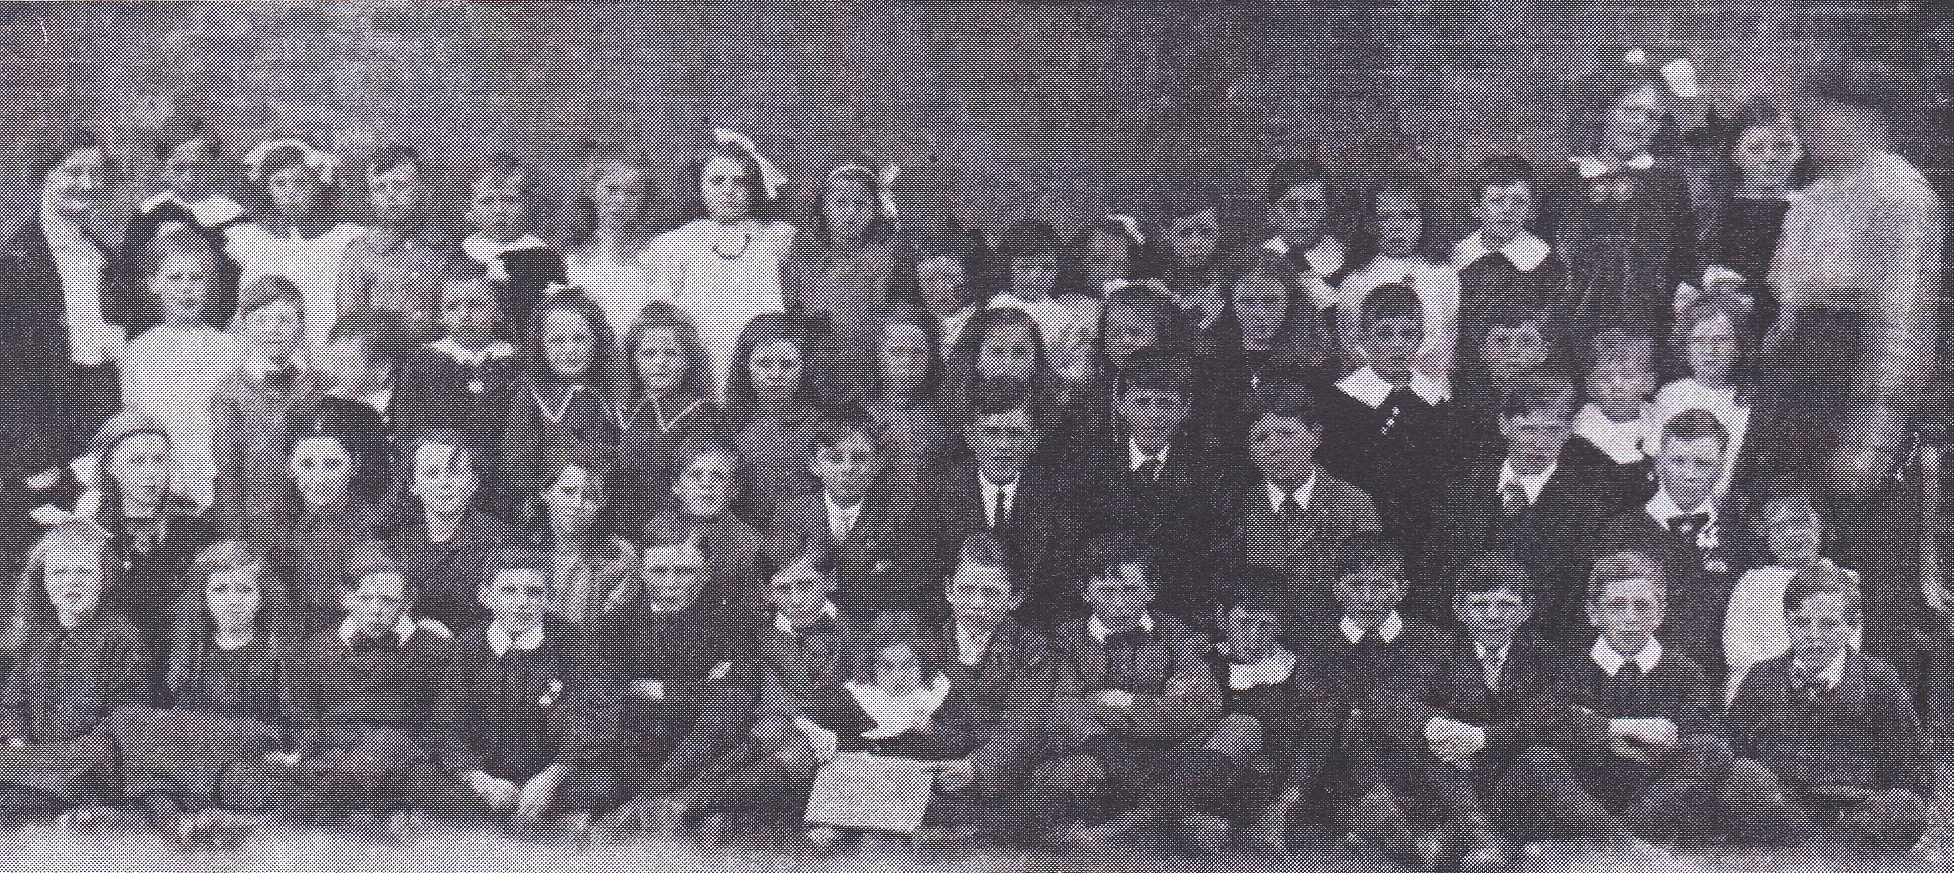 mission school circa 1917